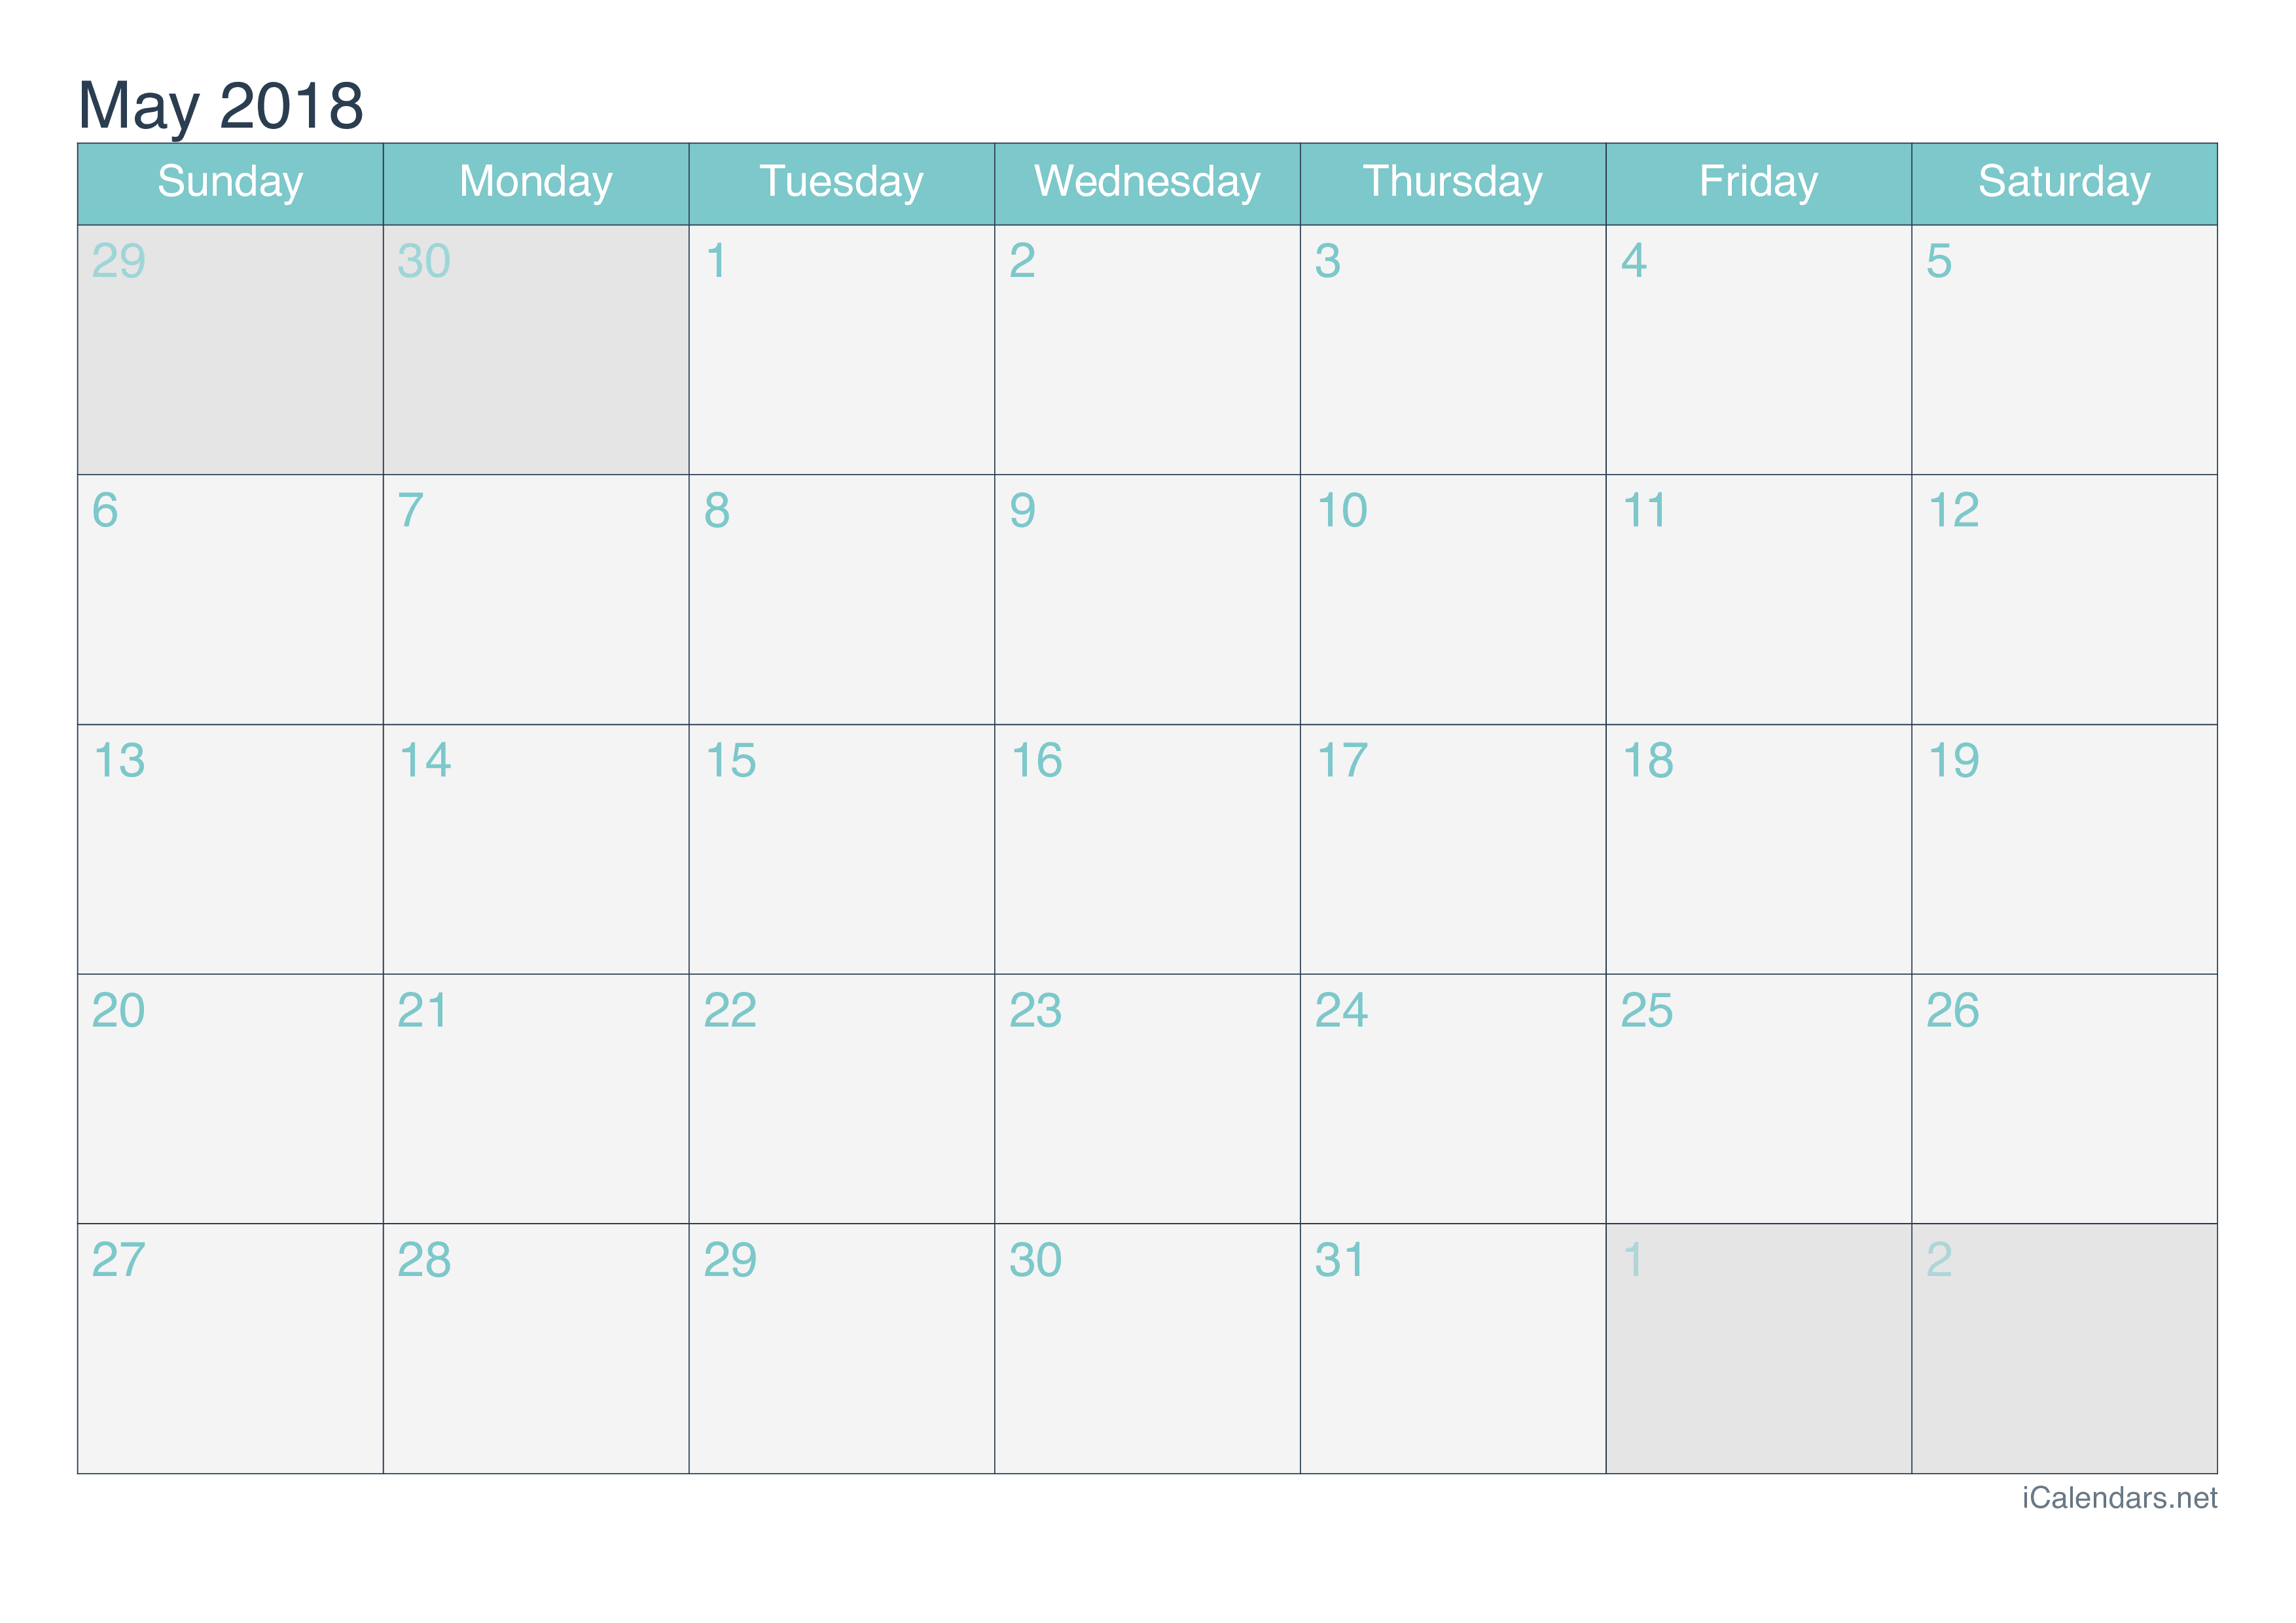 May 2018 Printable Calendar icalendars net